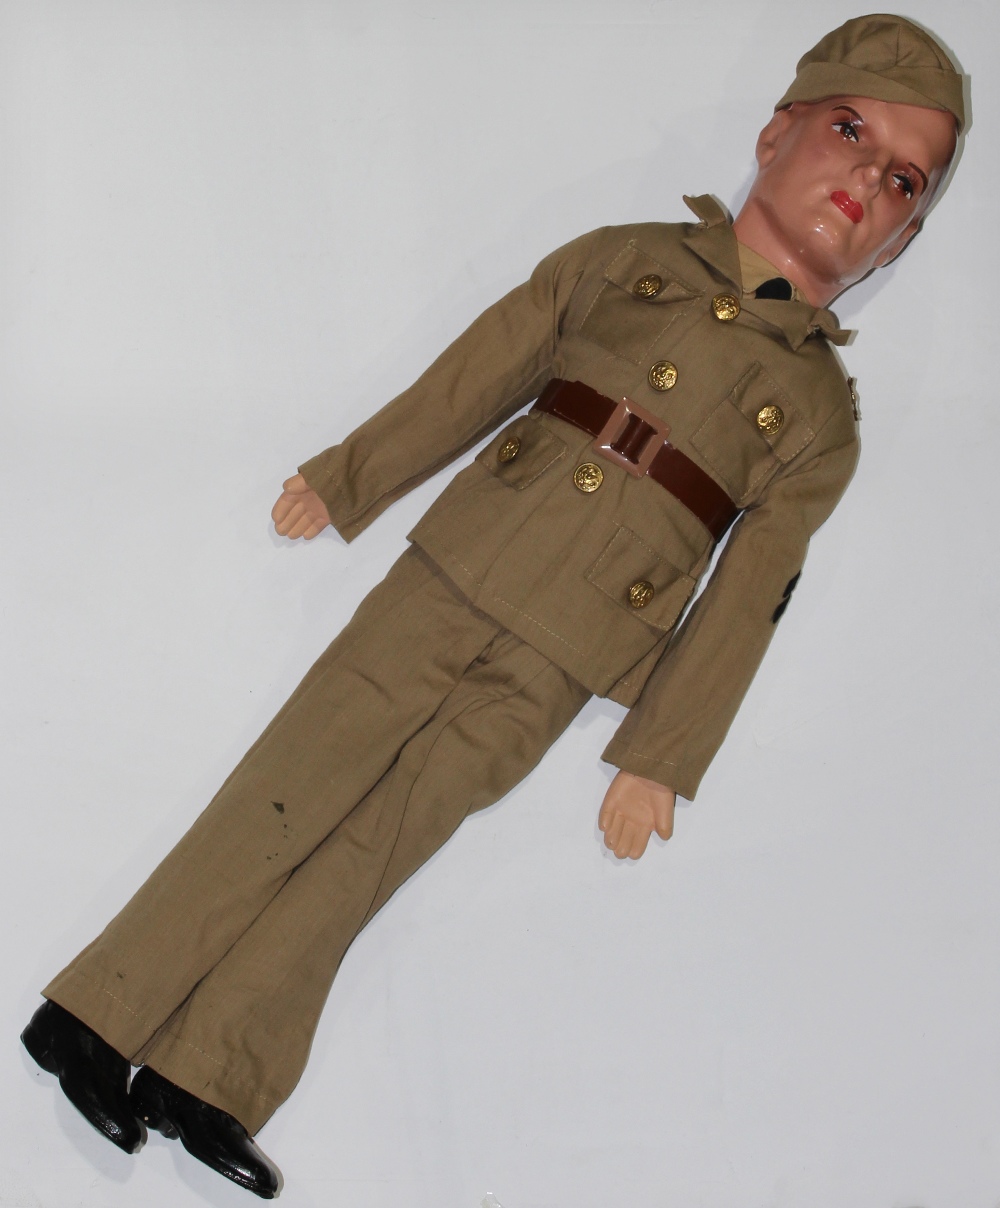 World War II advertising soldier doll, dressed in uniform, 26"h, Provenance: Palo Alto Junior Museum